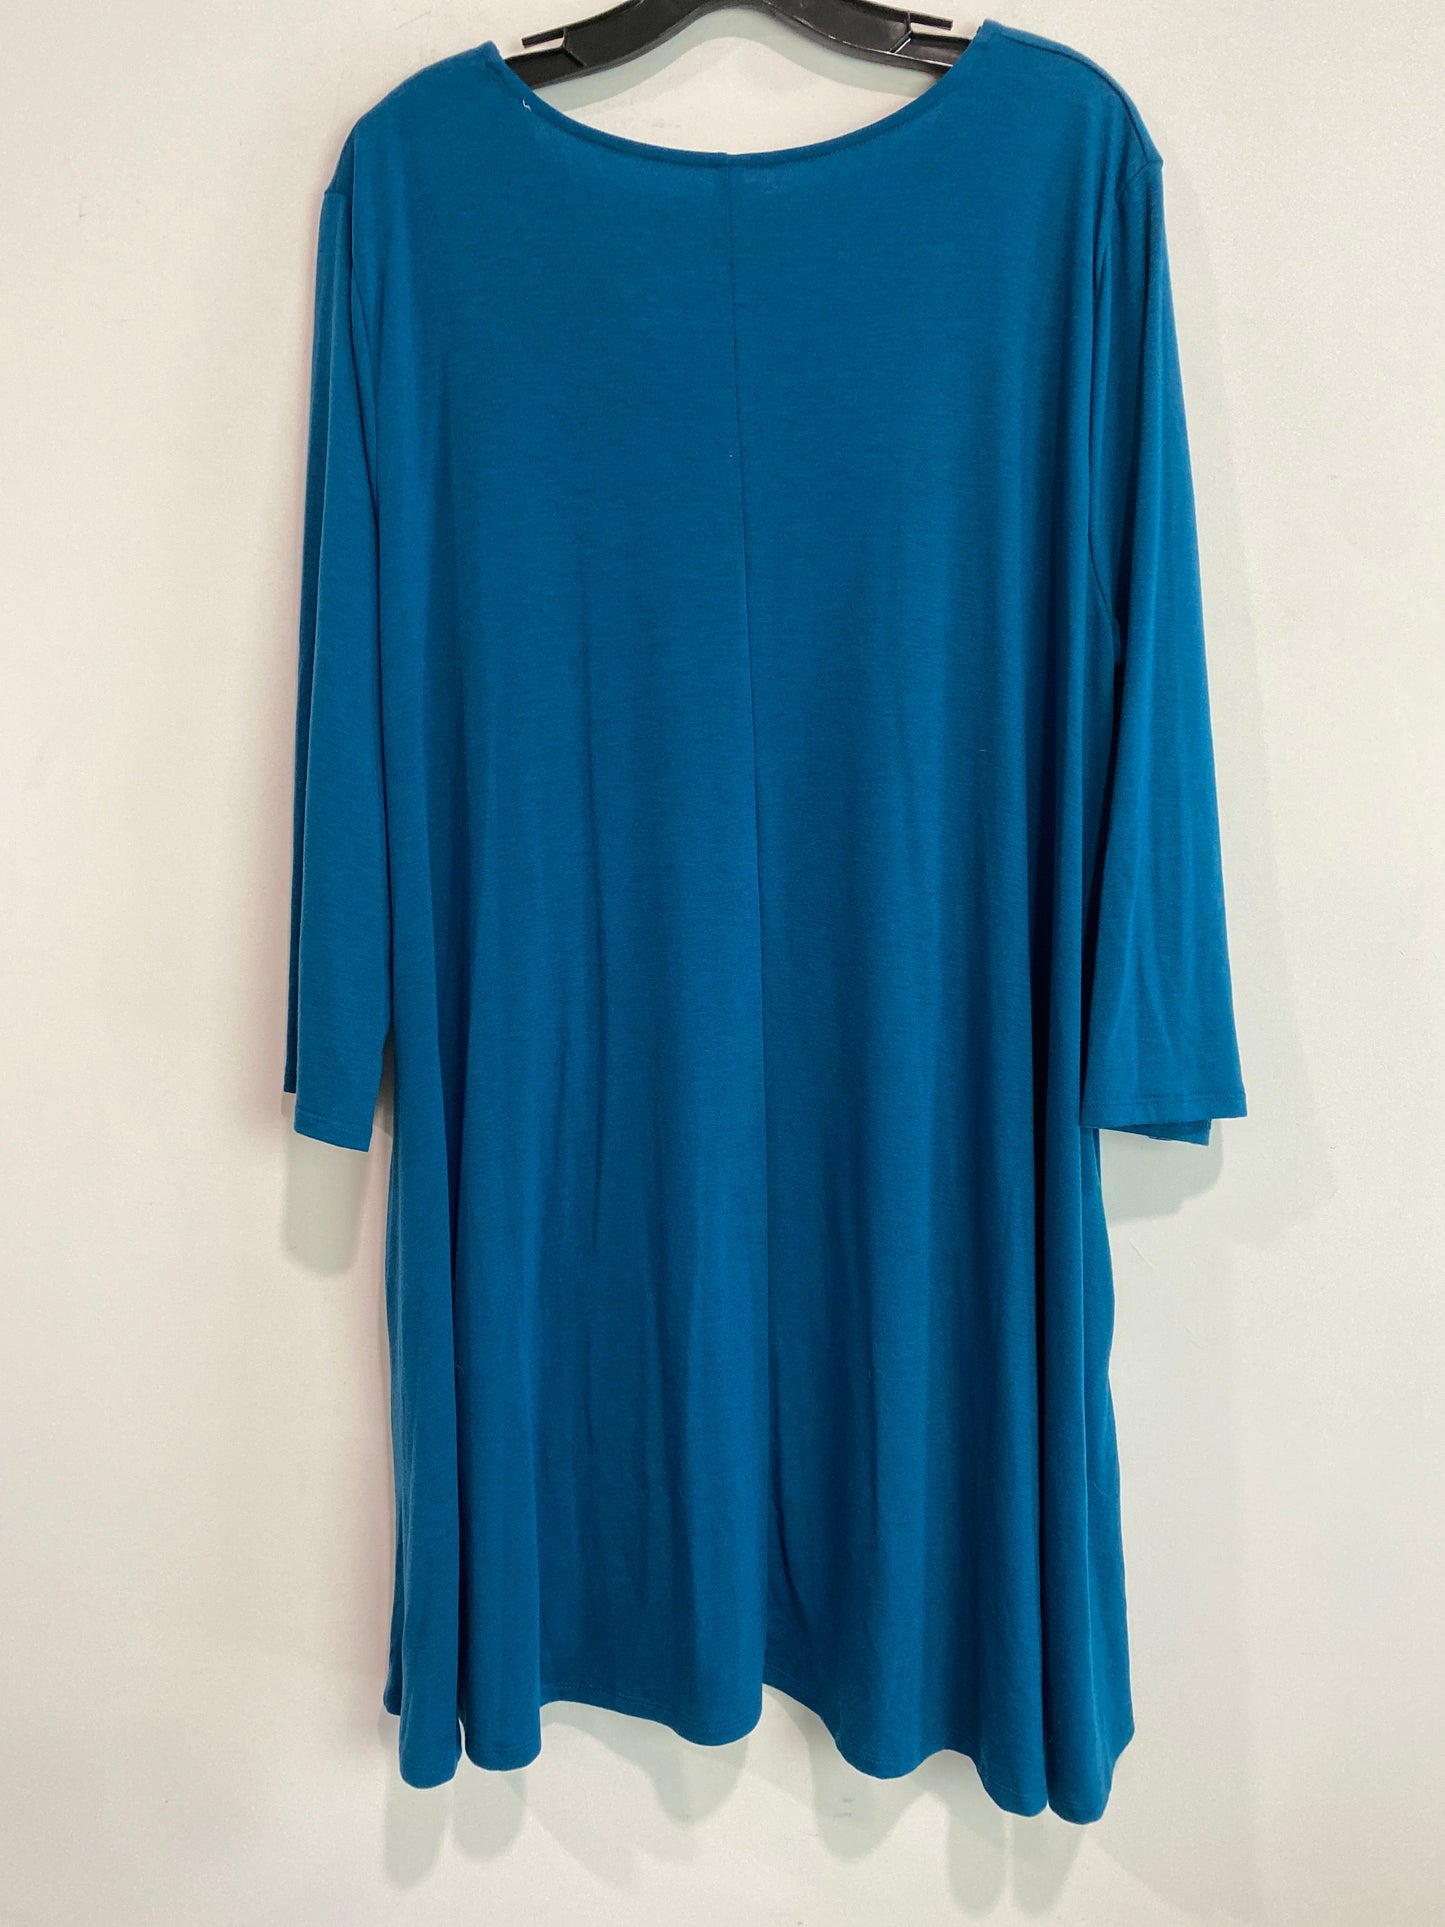 Blue Tunic 3/4 Sleeve Zenana Outfitters, Size 3x